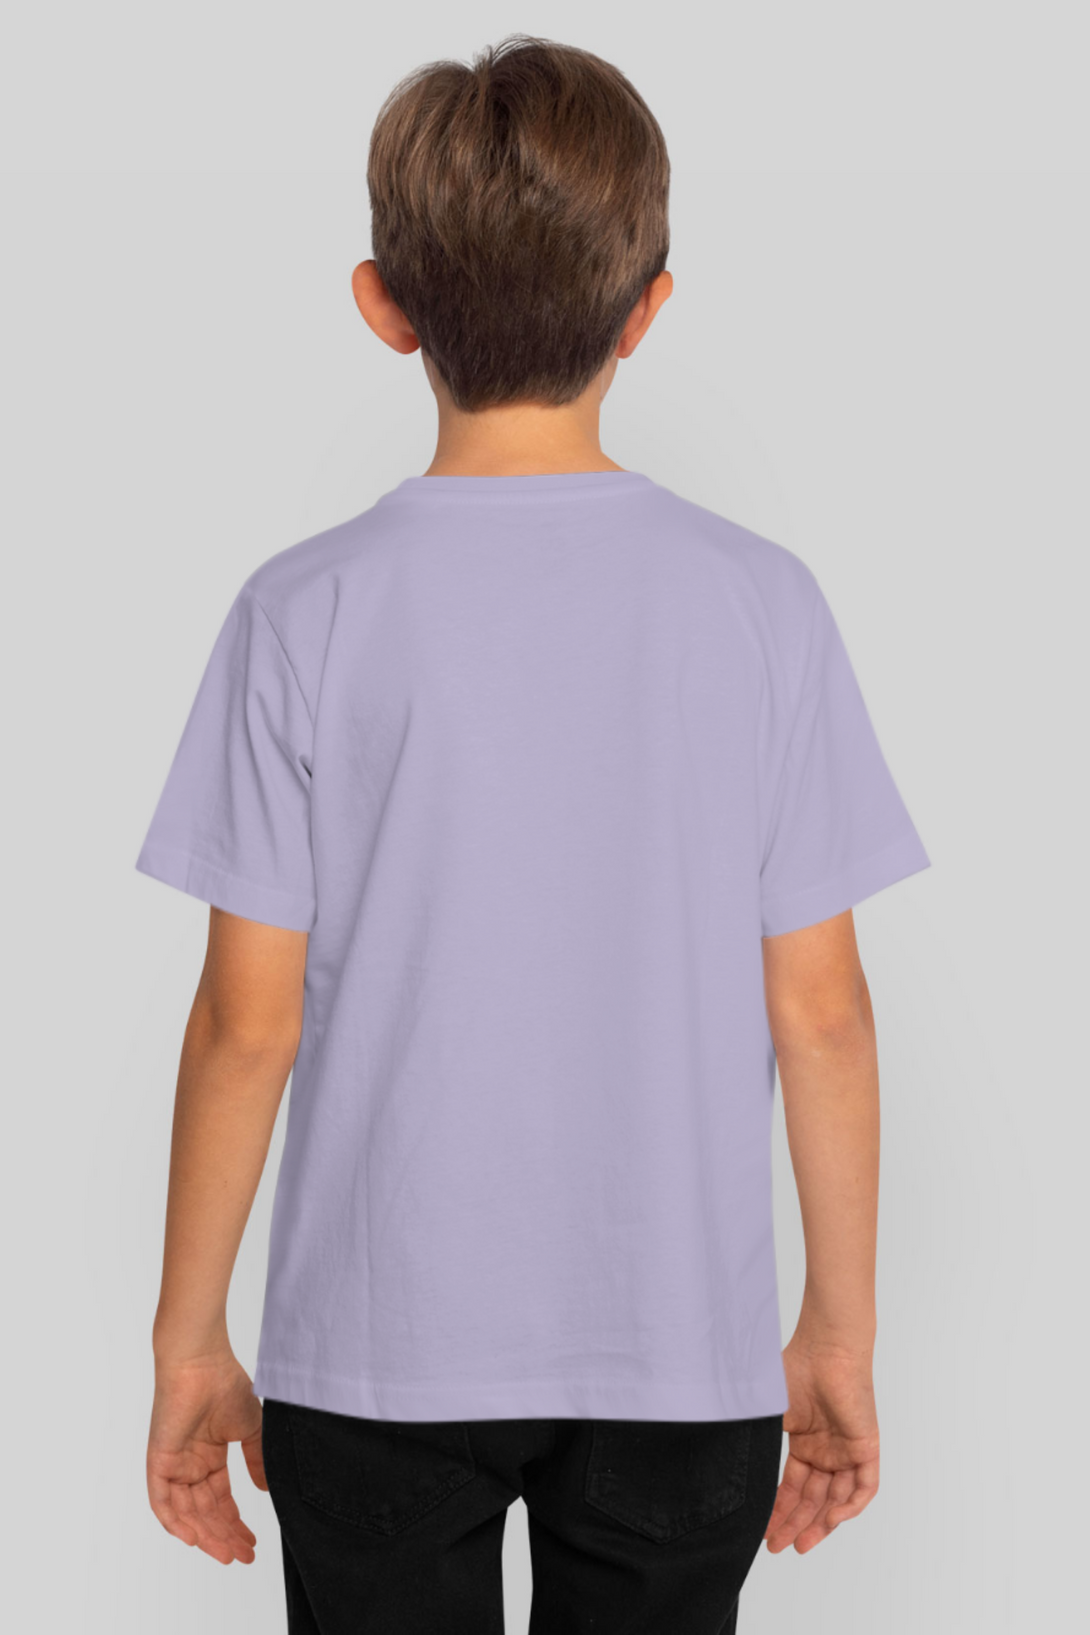 Lavender T-Shirt For Boy - WowWaves - 2